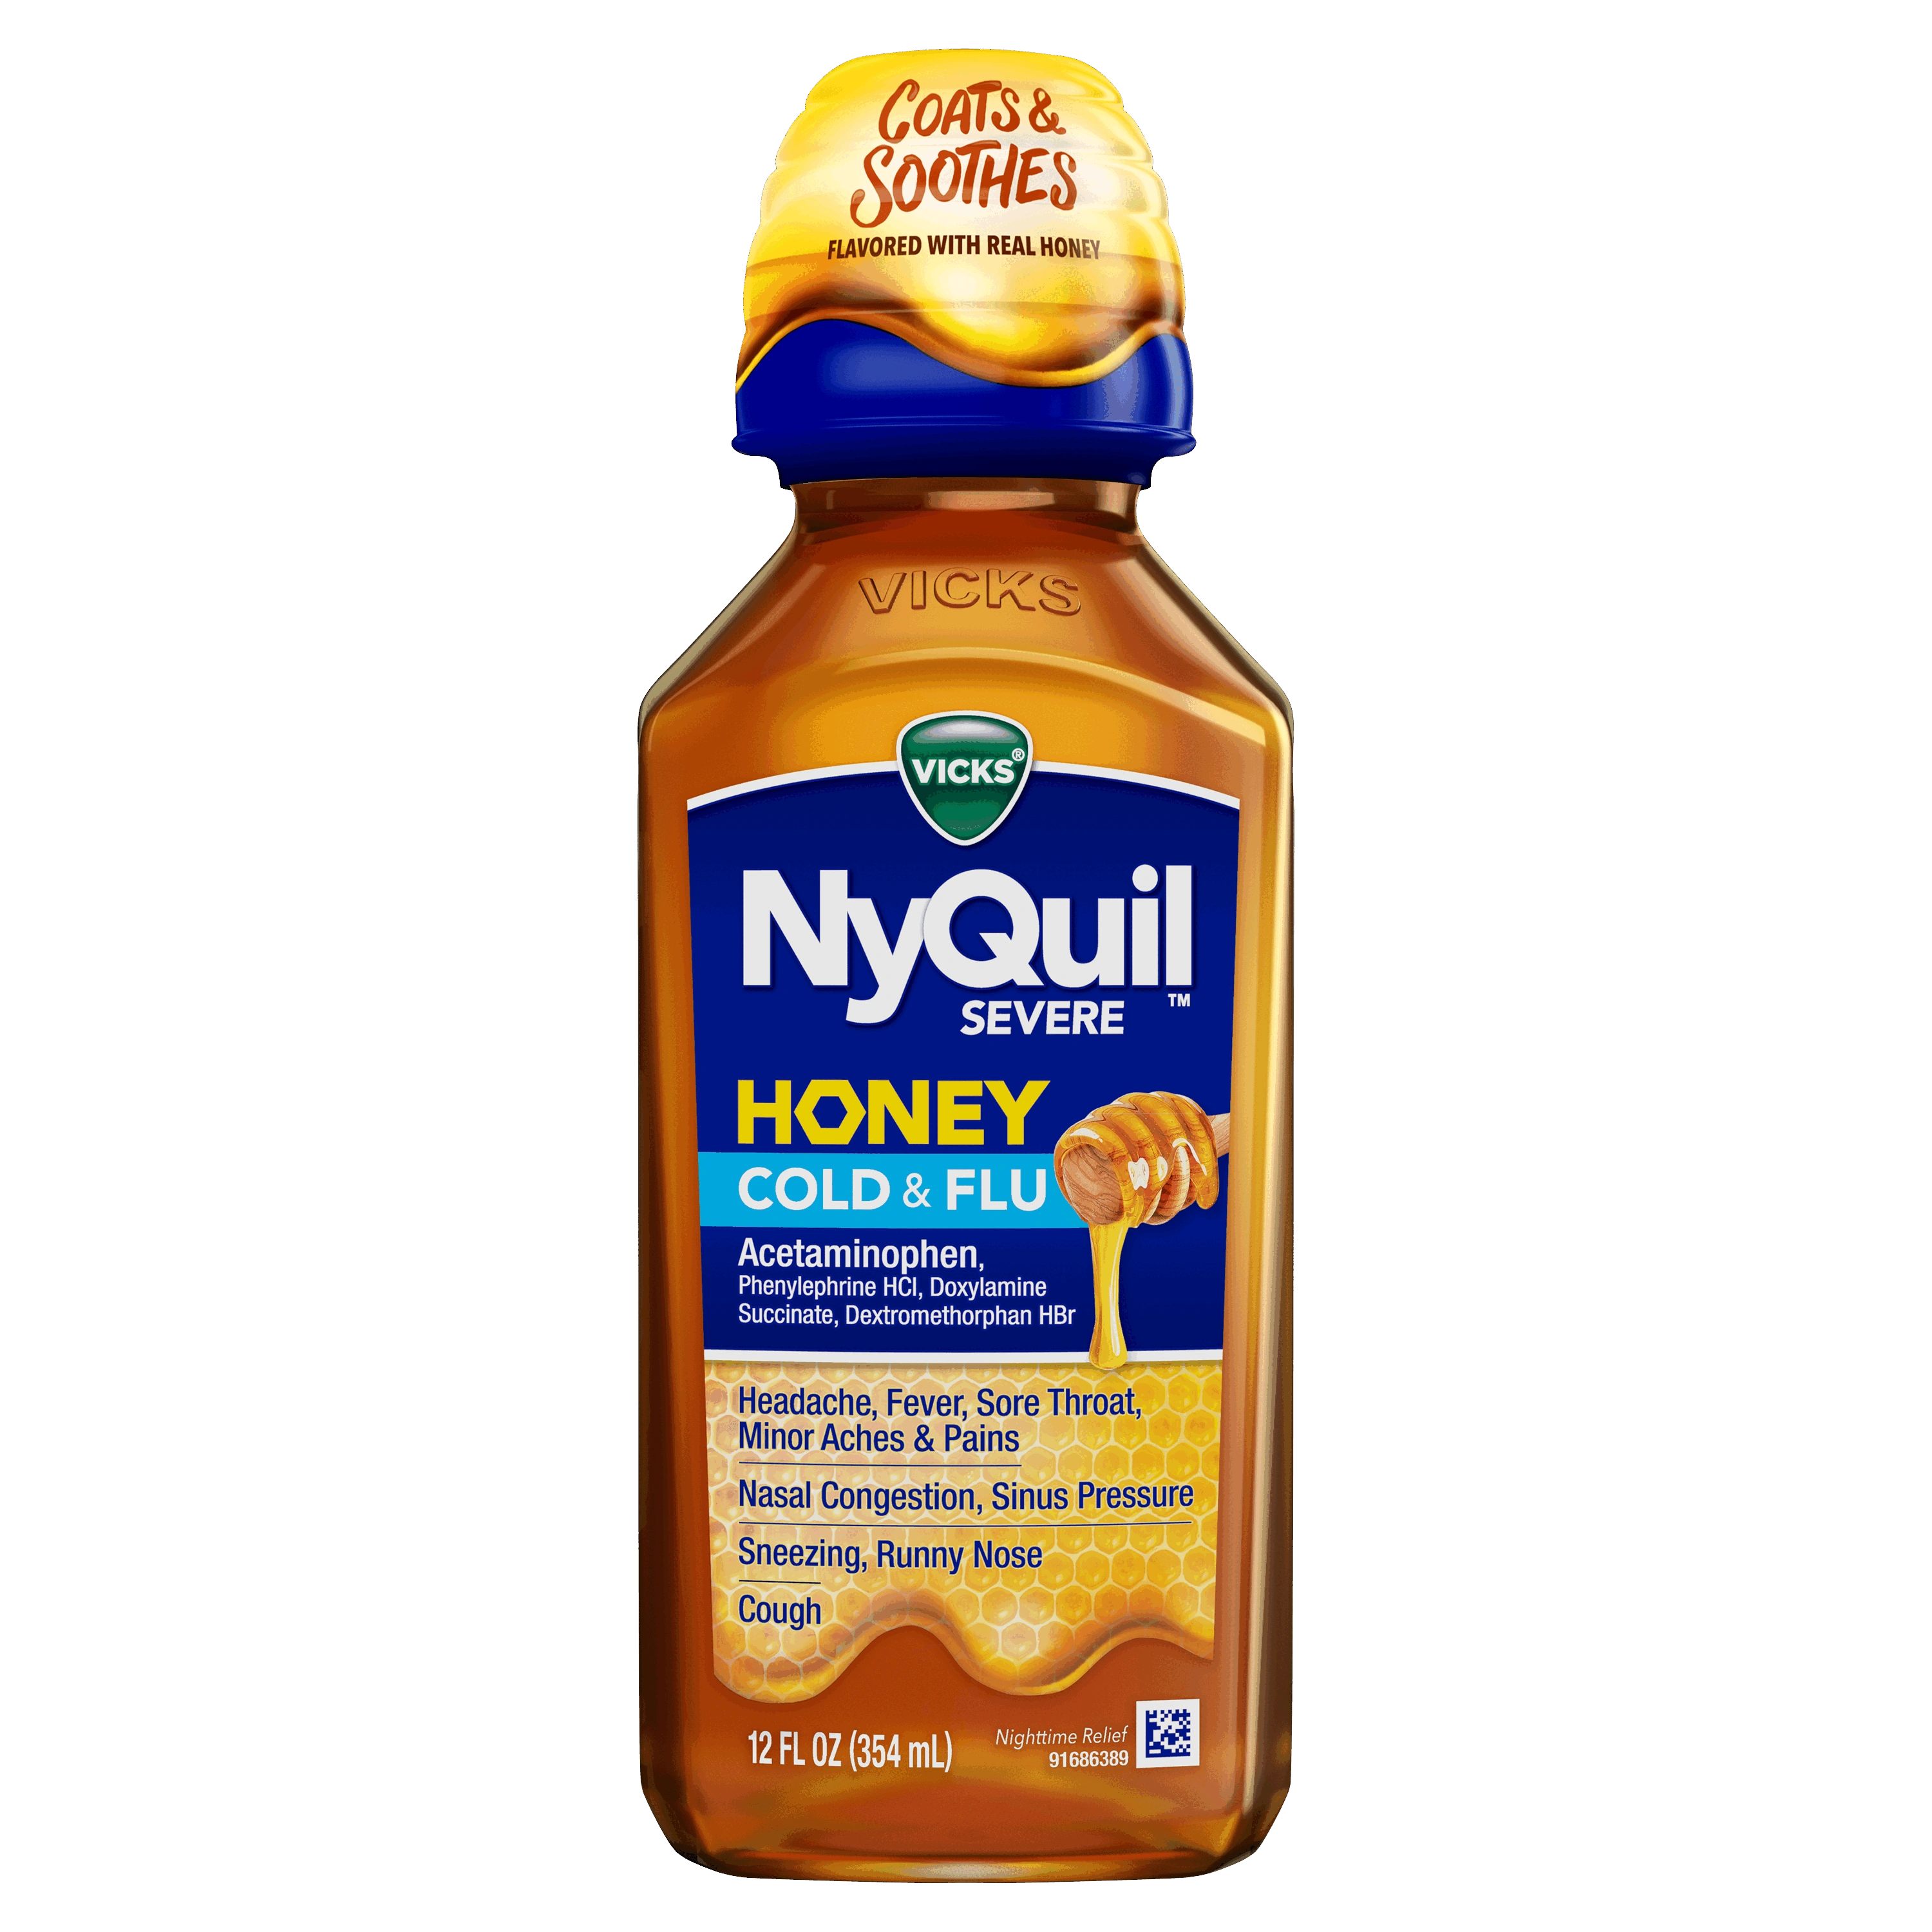 NyQuil™ SEVERE Honey Maximum Strength Cough, Cold & Flu Nighttime Relief Li...